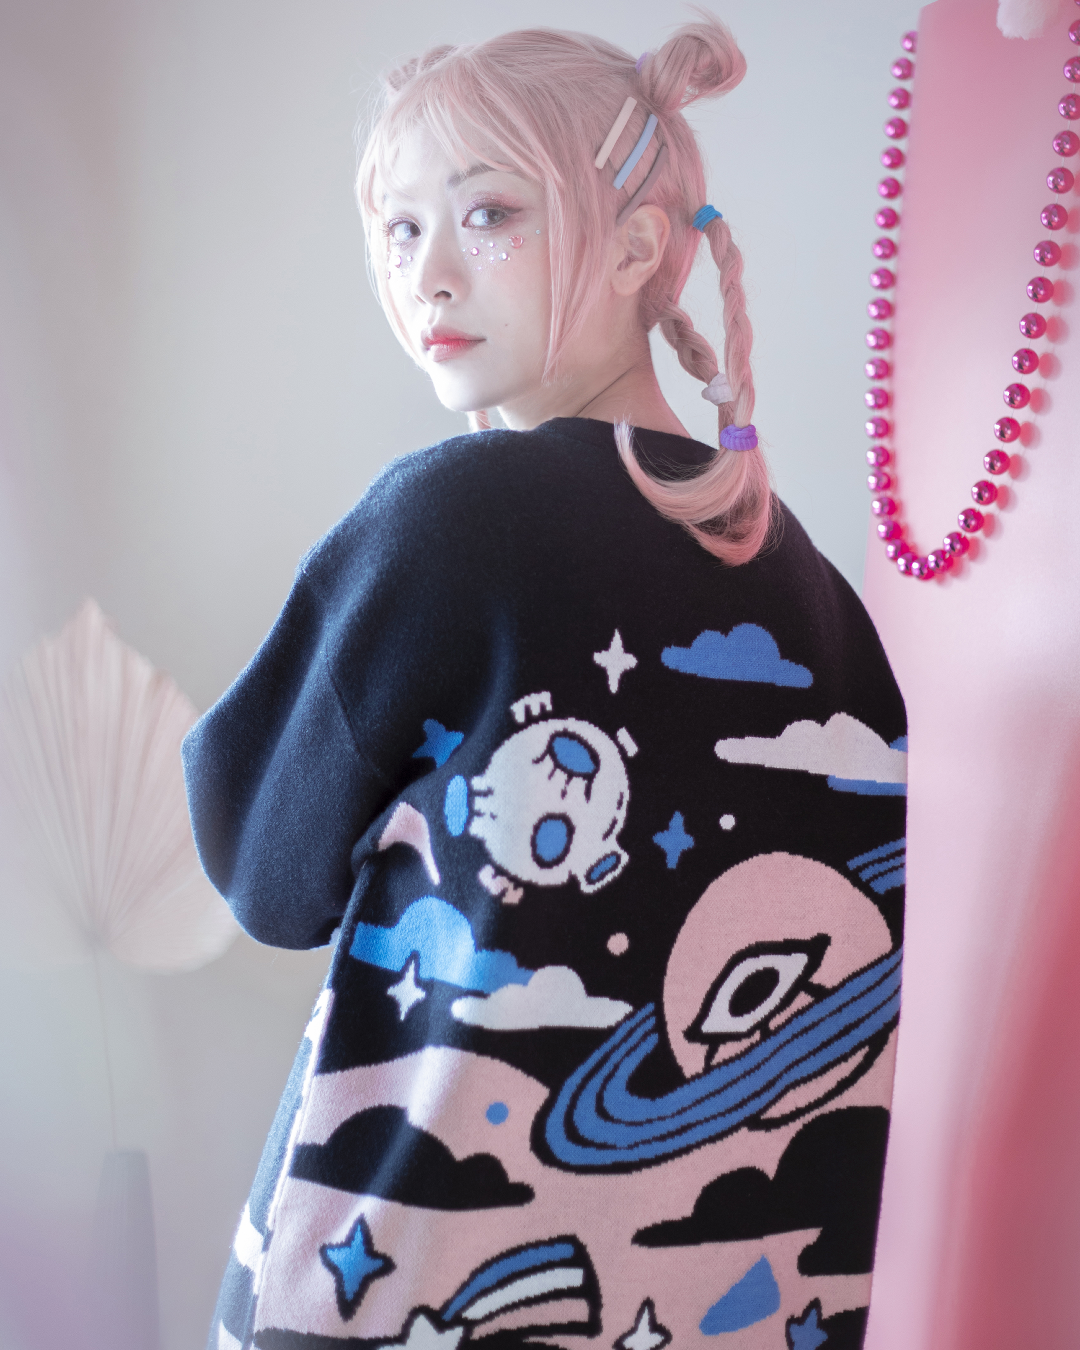 Sweater: Galaxy